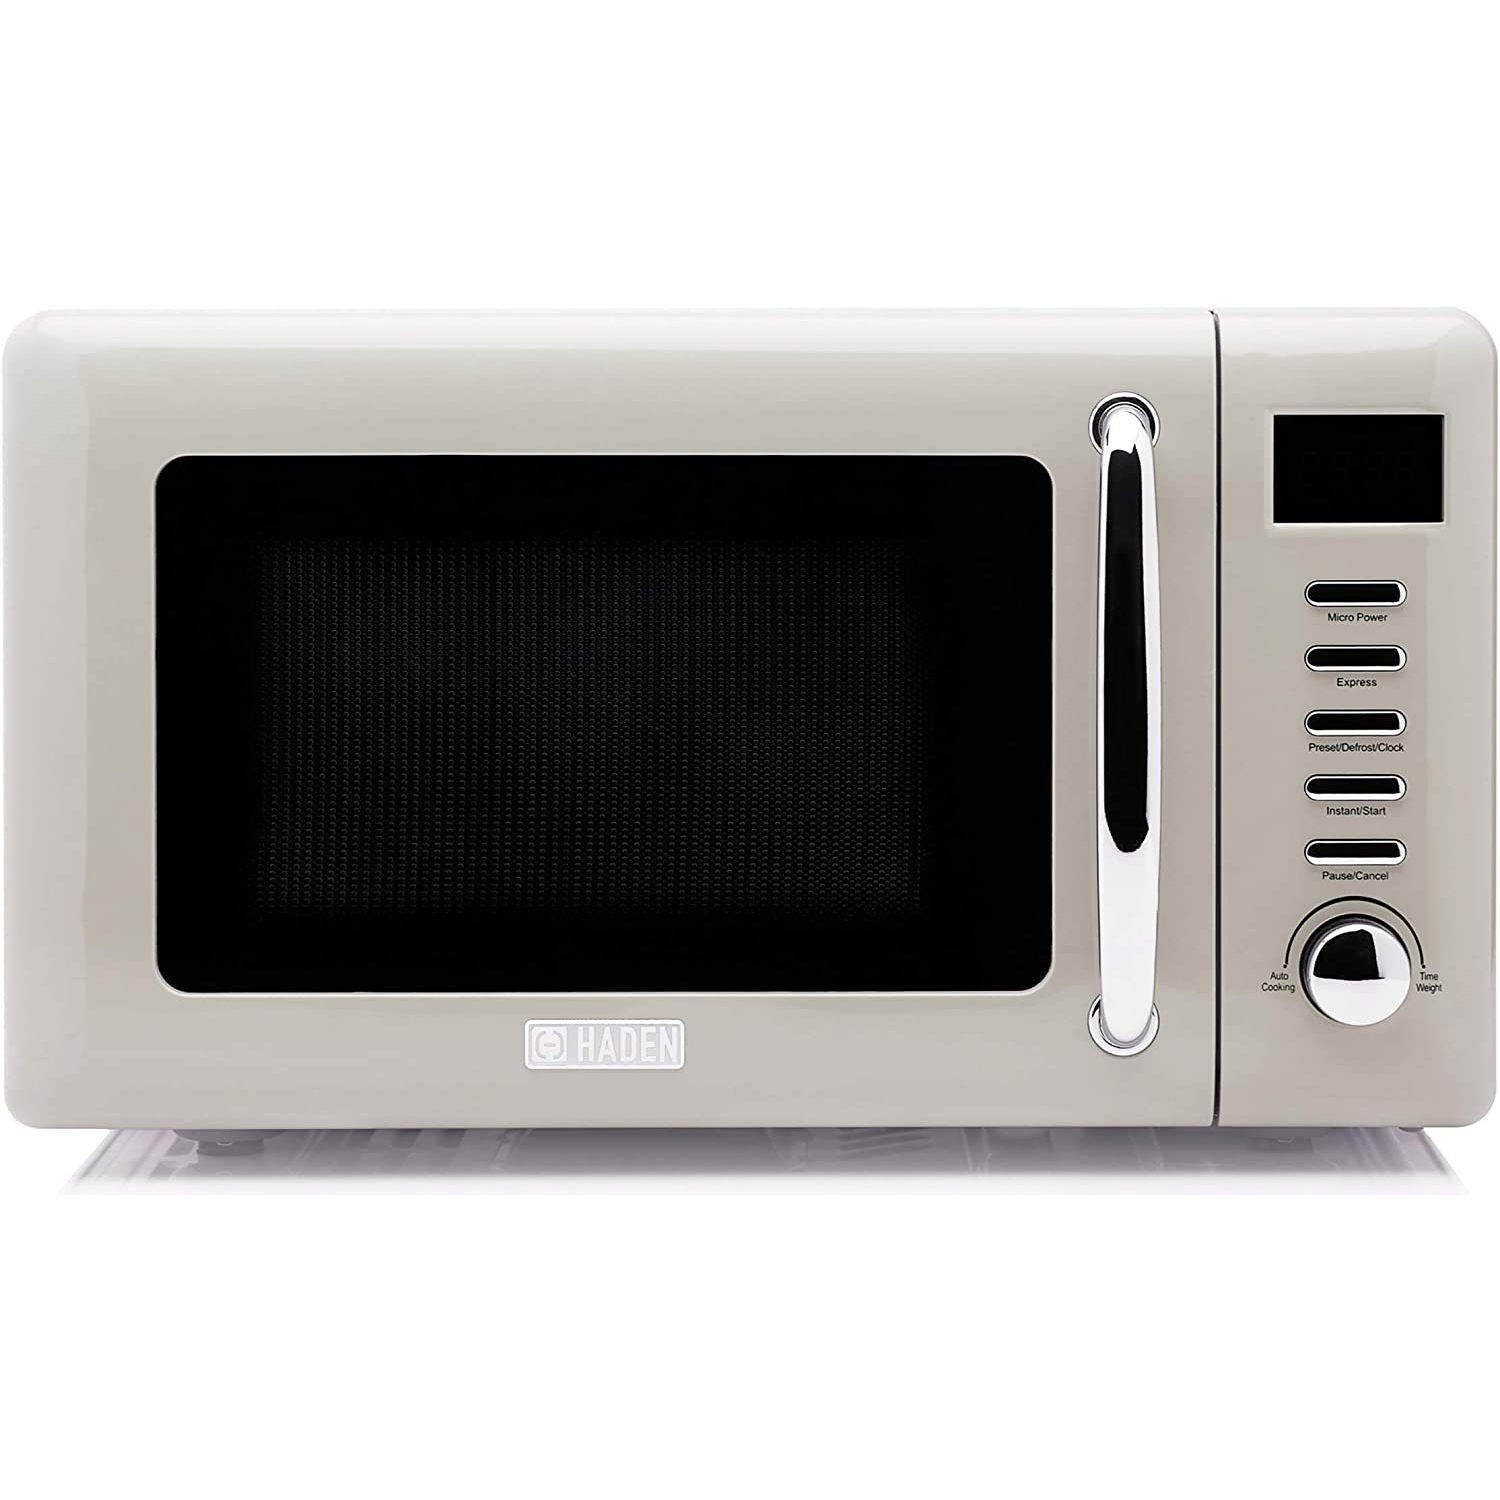 Haden 75030 Cotswold Retro 0.7 Cu Ft 800W Countertop Microwave Oven